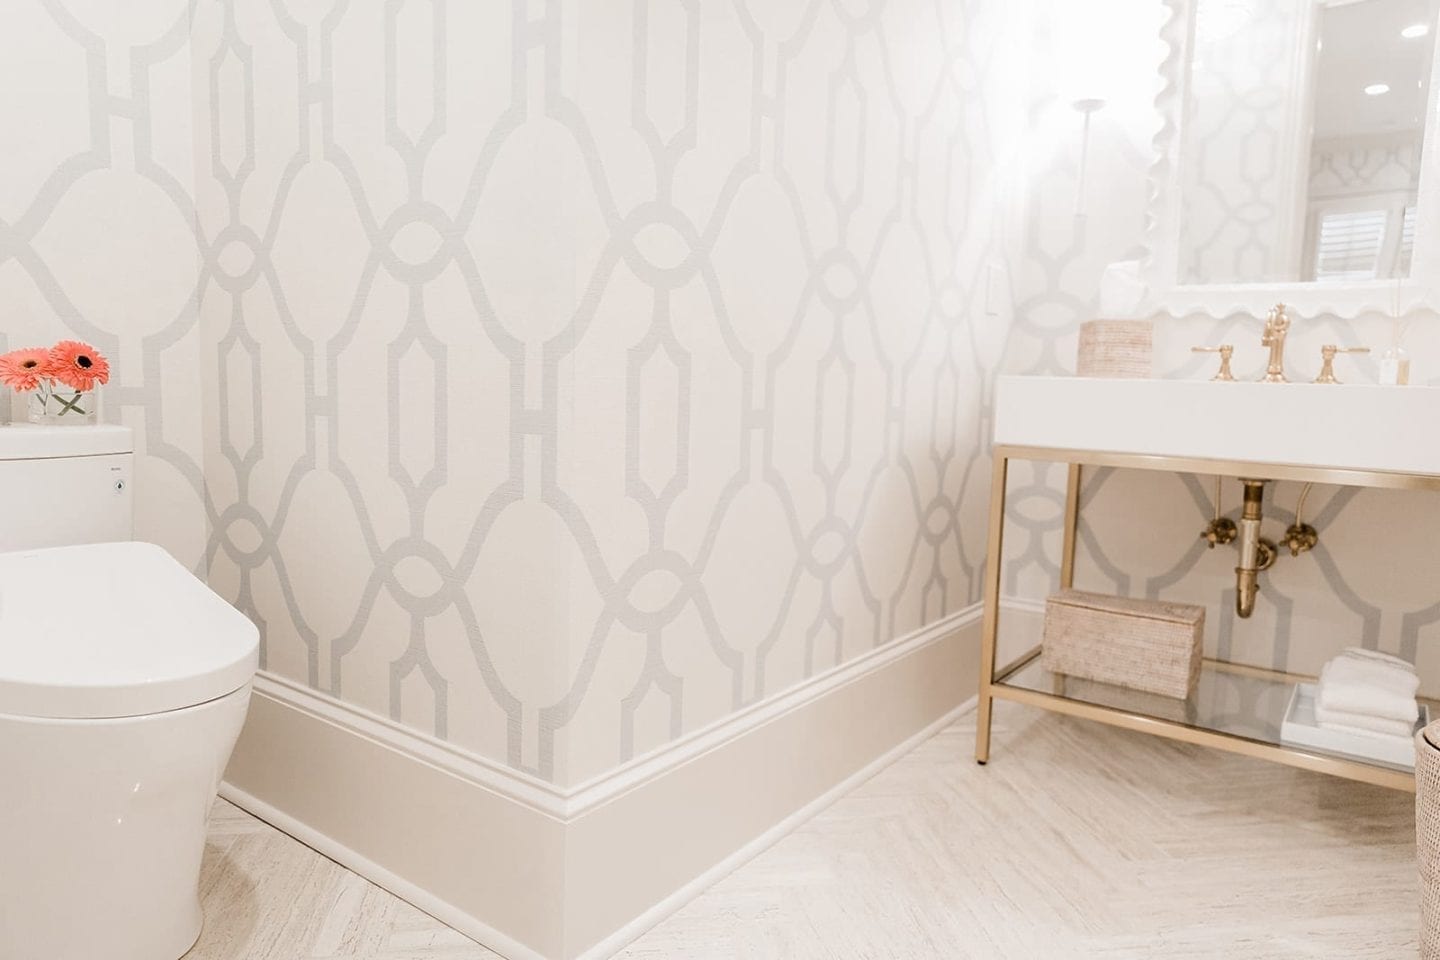 TOTO bidet toilets with Joanna Gaines wallpaper, herringbone travertine floor and white mirror.